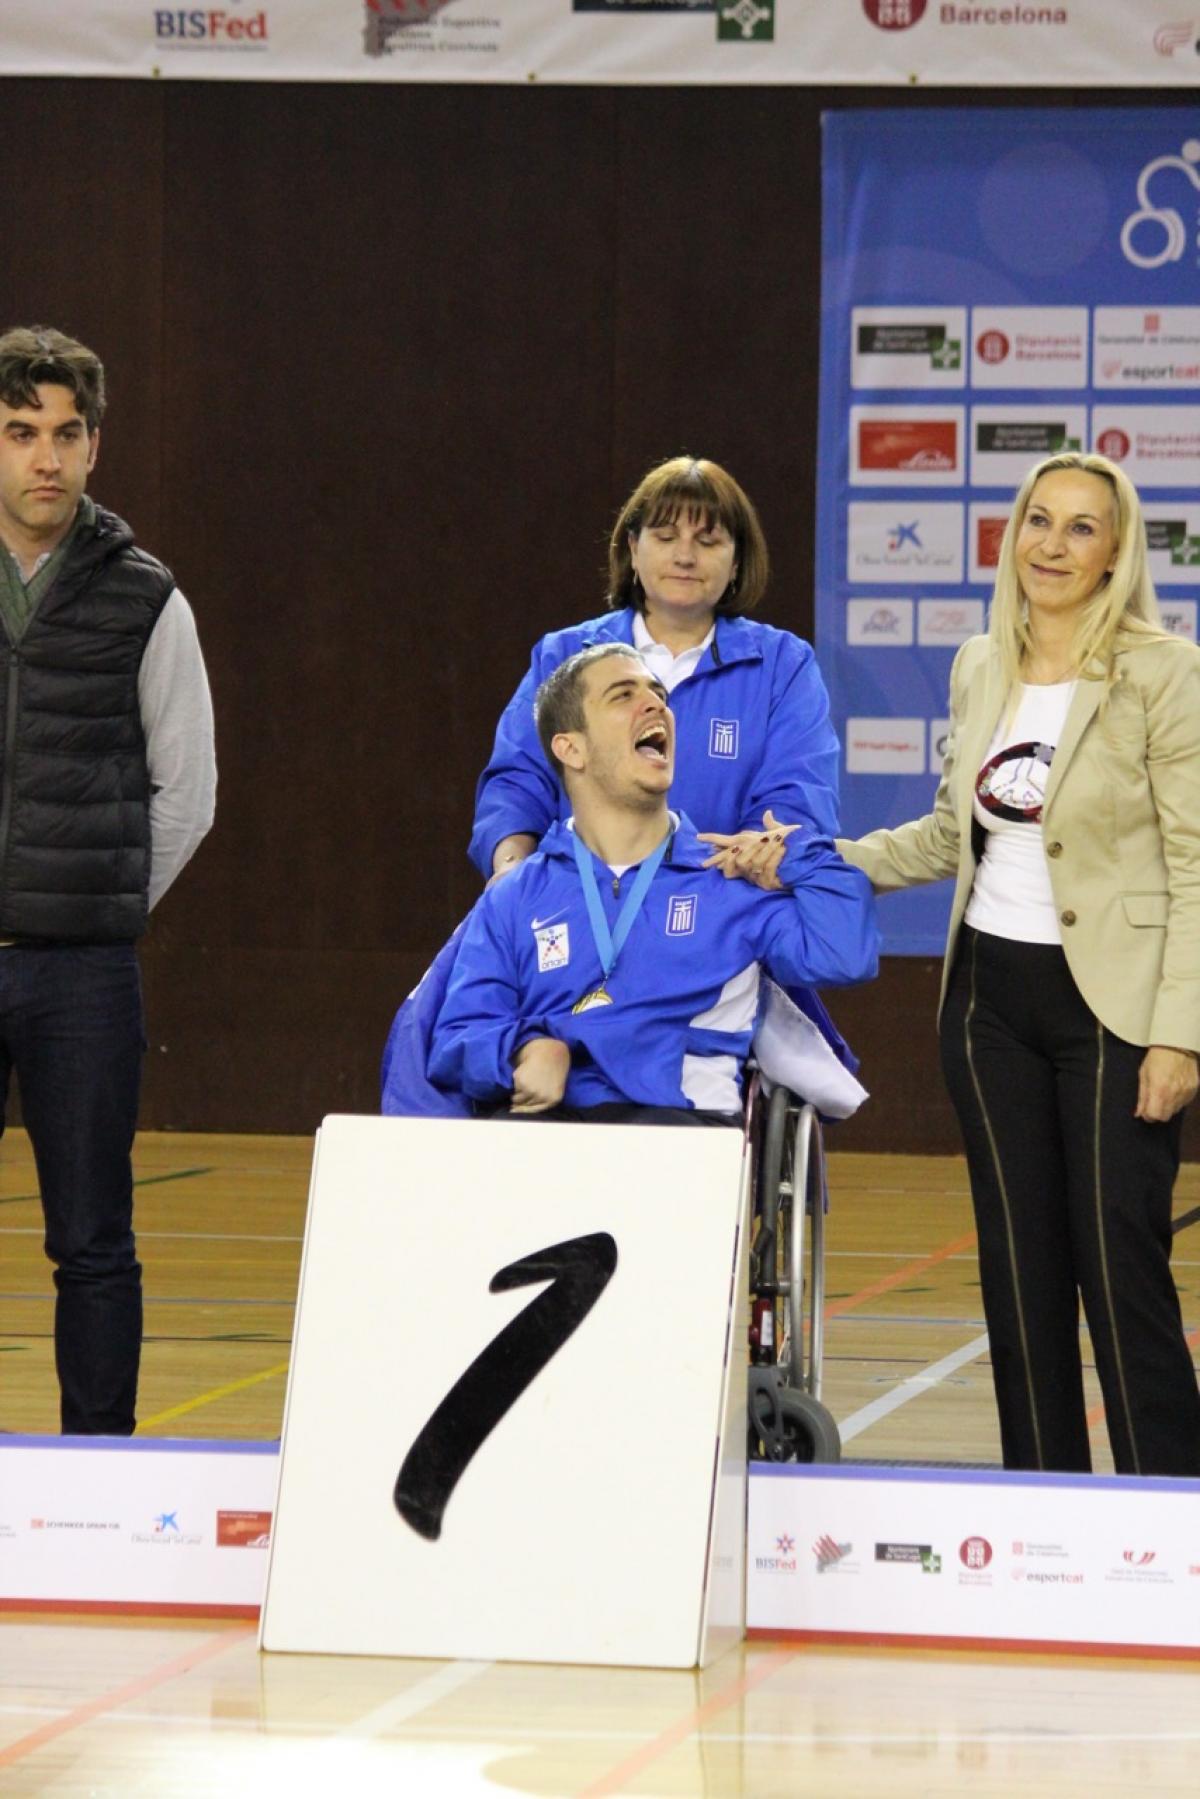 Boccia athlete at the medal ceremony 